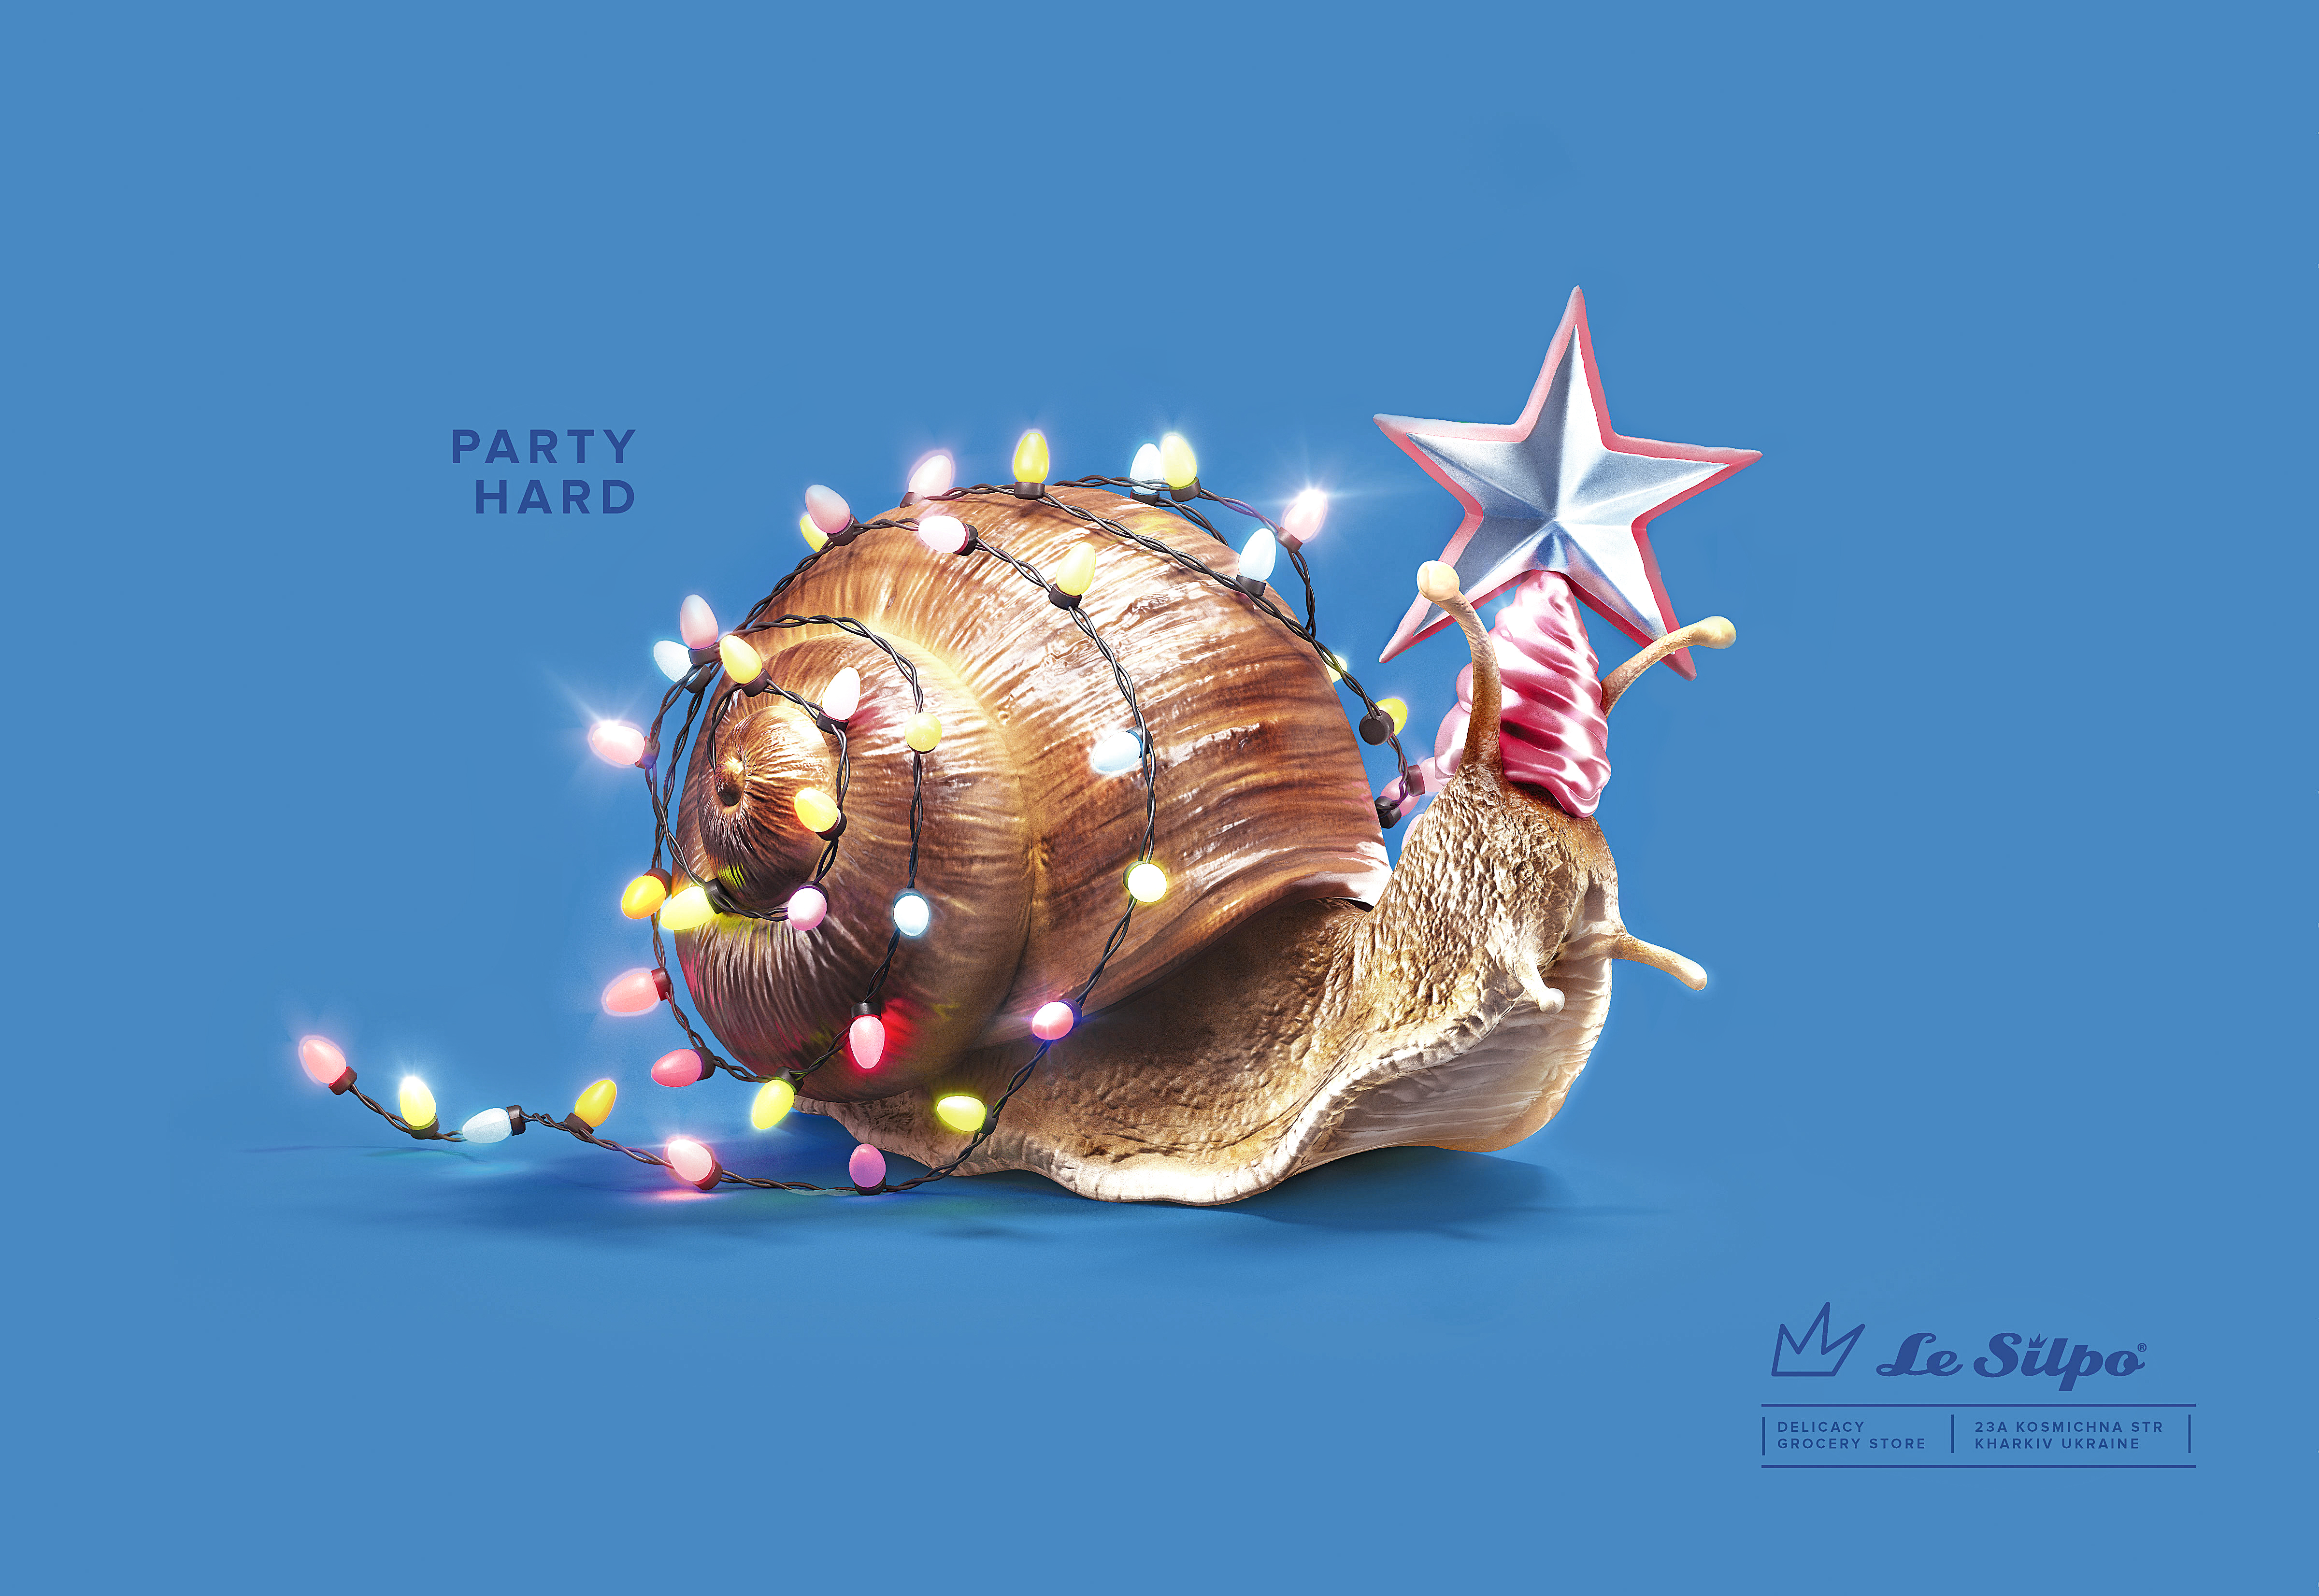 Party Hard. Snail